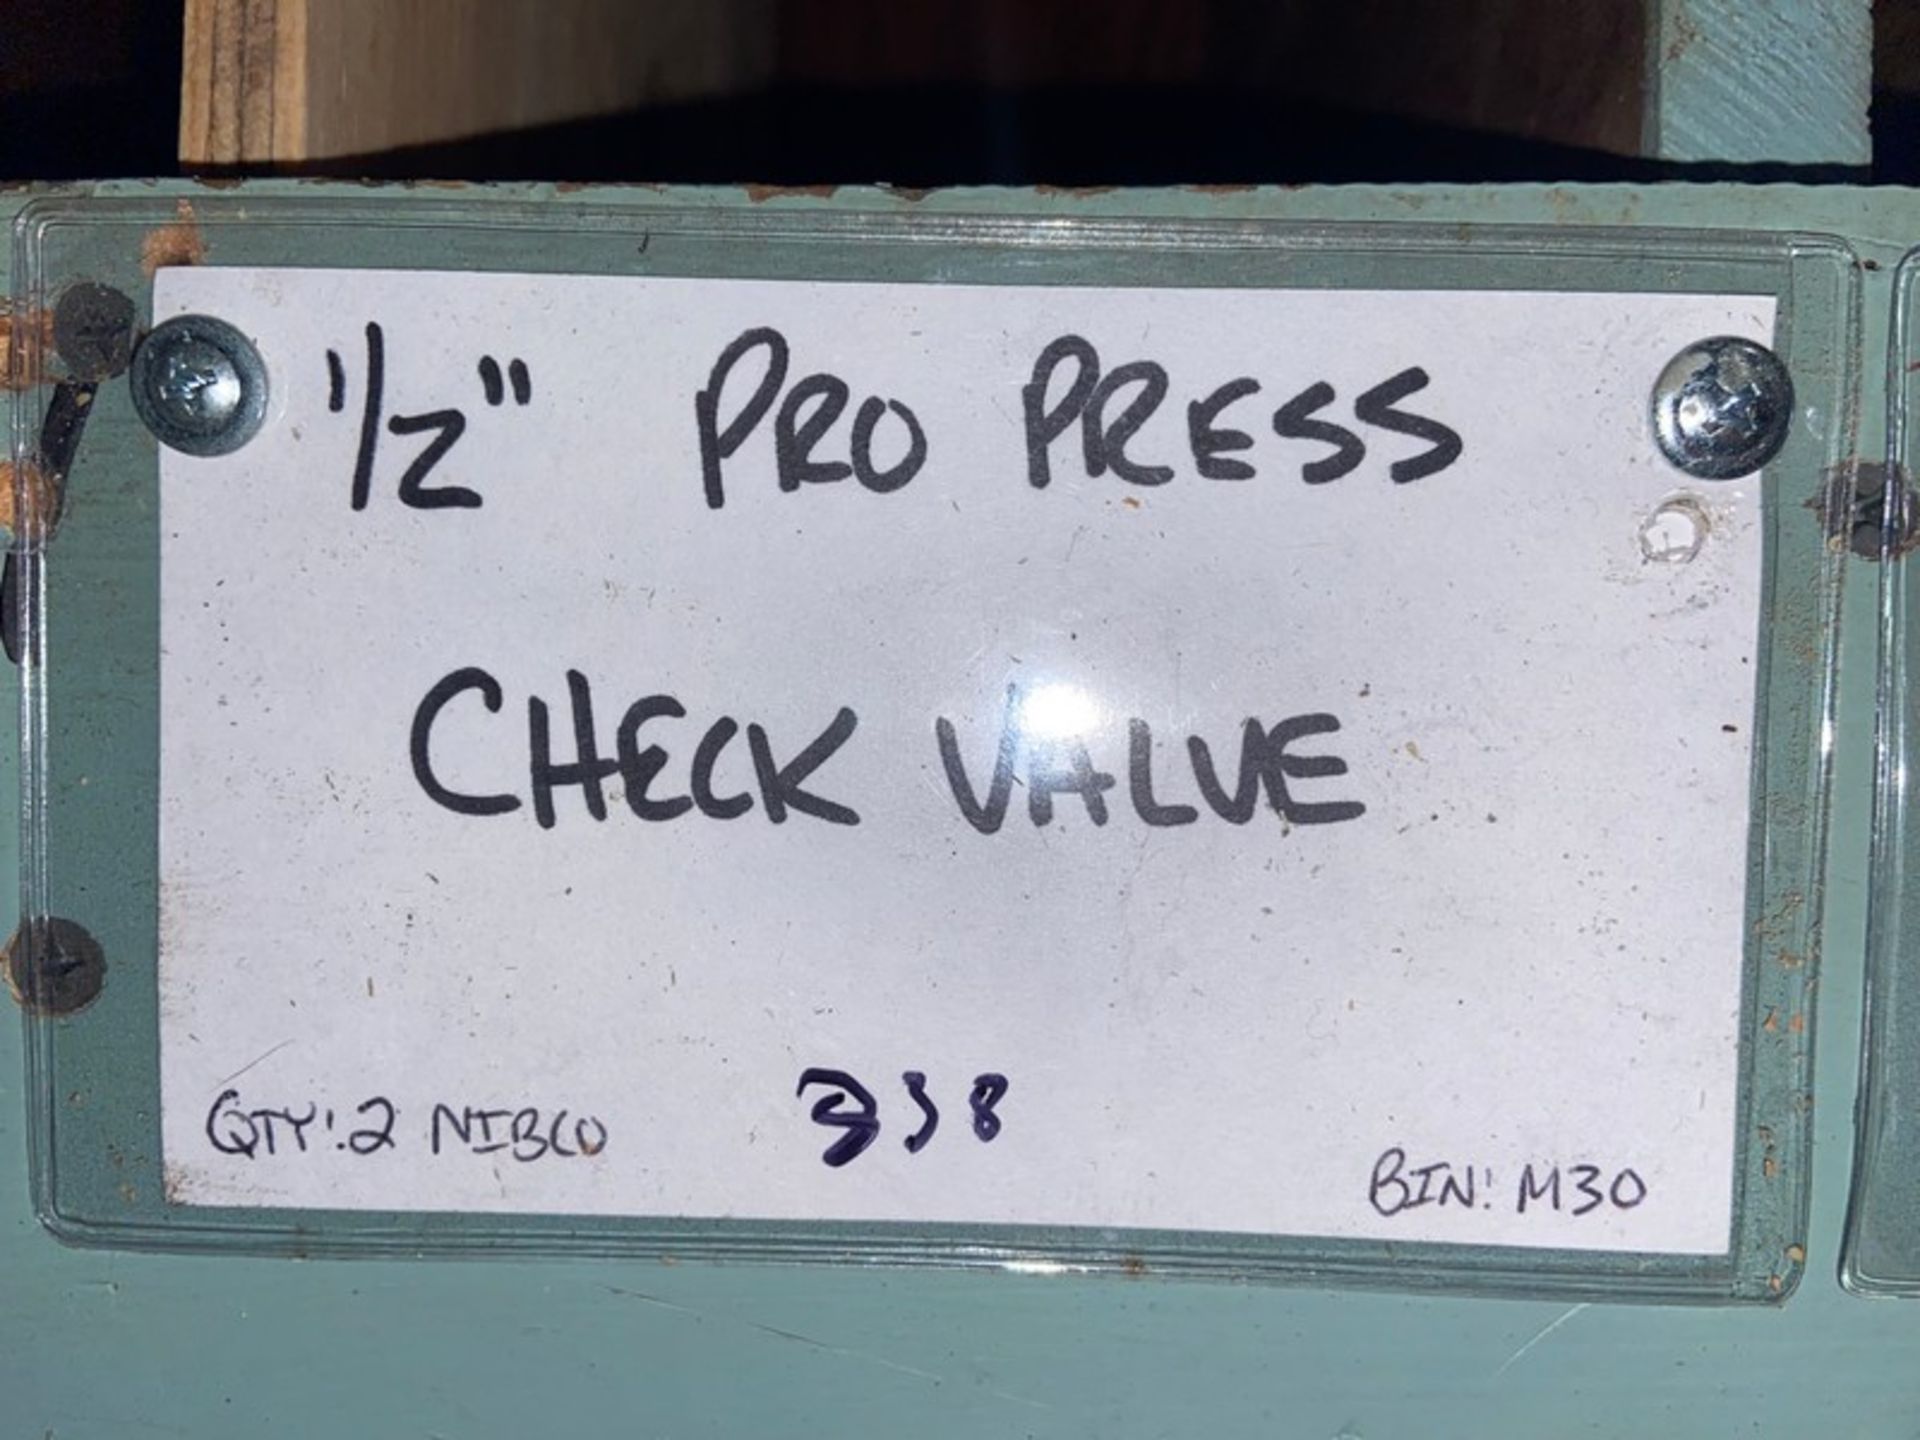 (4) Sweat (1) IPS 1” Check Valve (Bin:M31); 1/2” pro press check valve (Bin:M30); 1/2” Check - Image 6 of 10